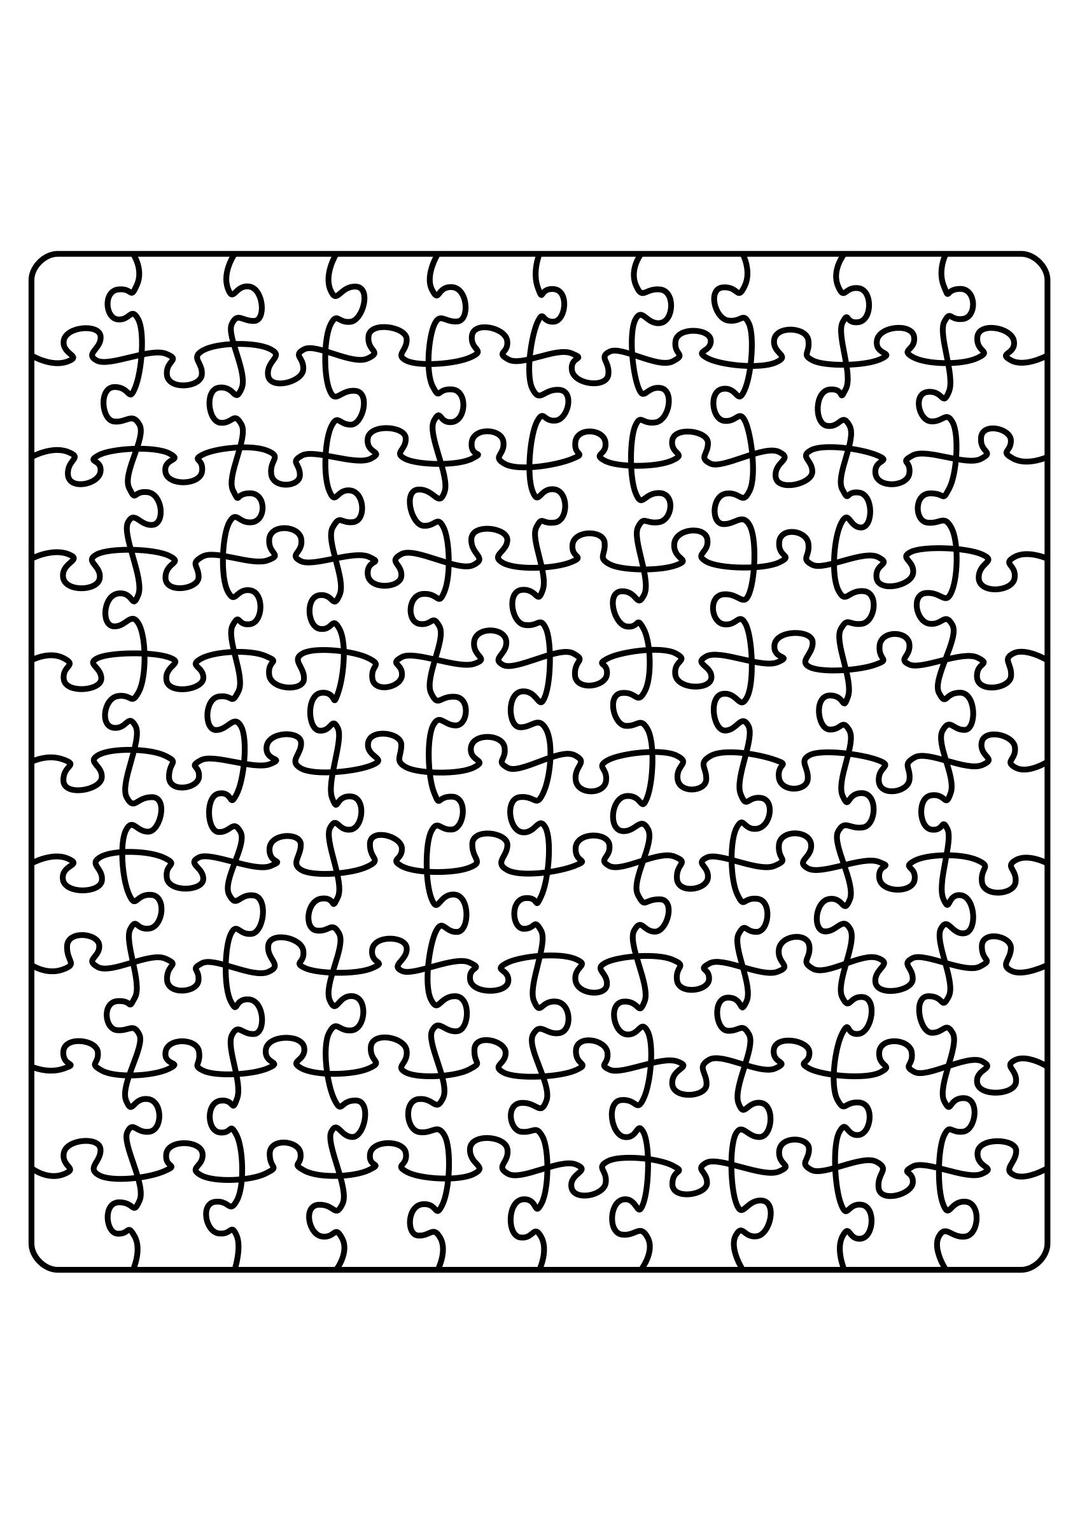 Jigsaw Puzzle A4 10 x 10  png transparent